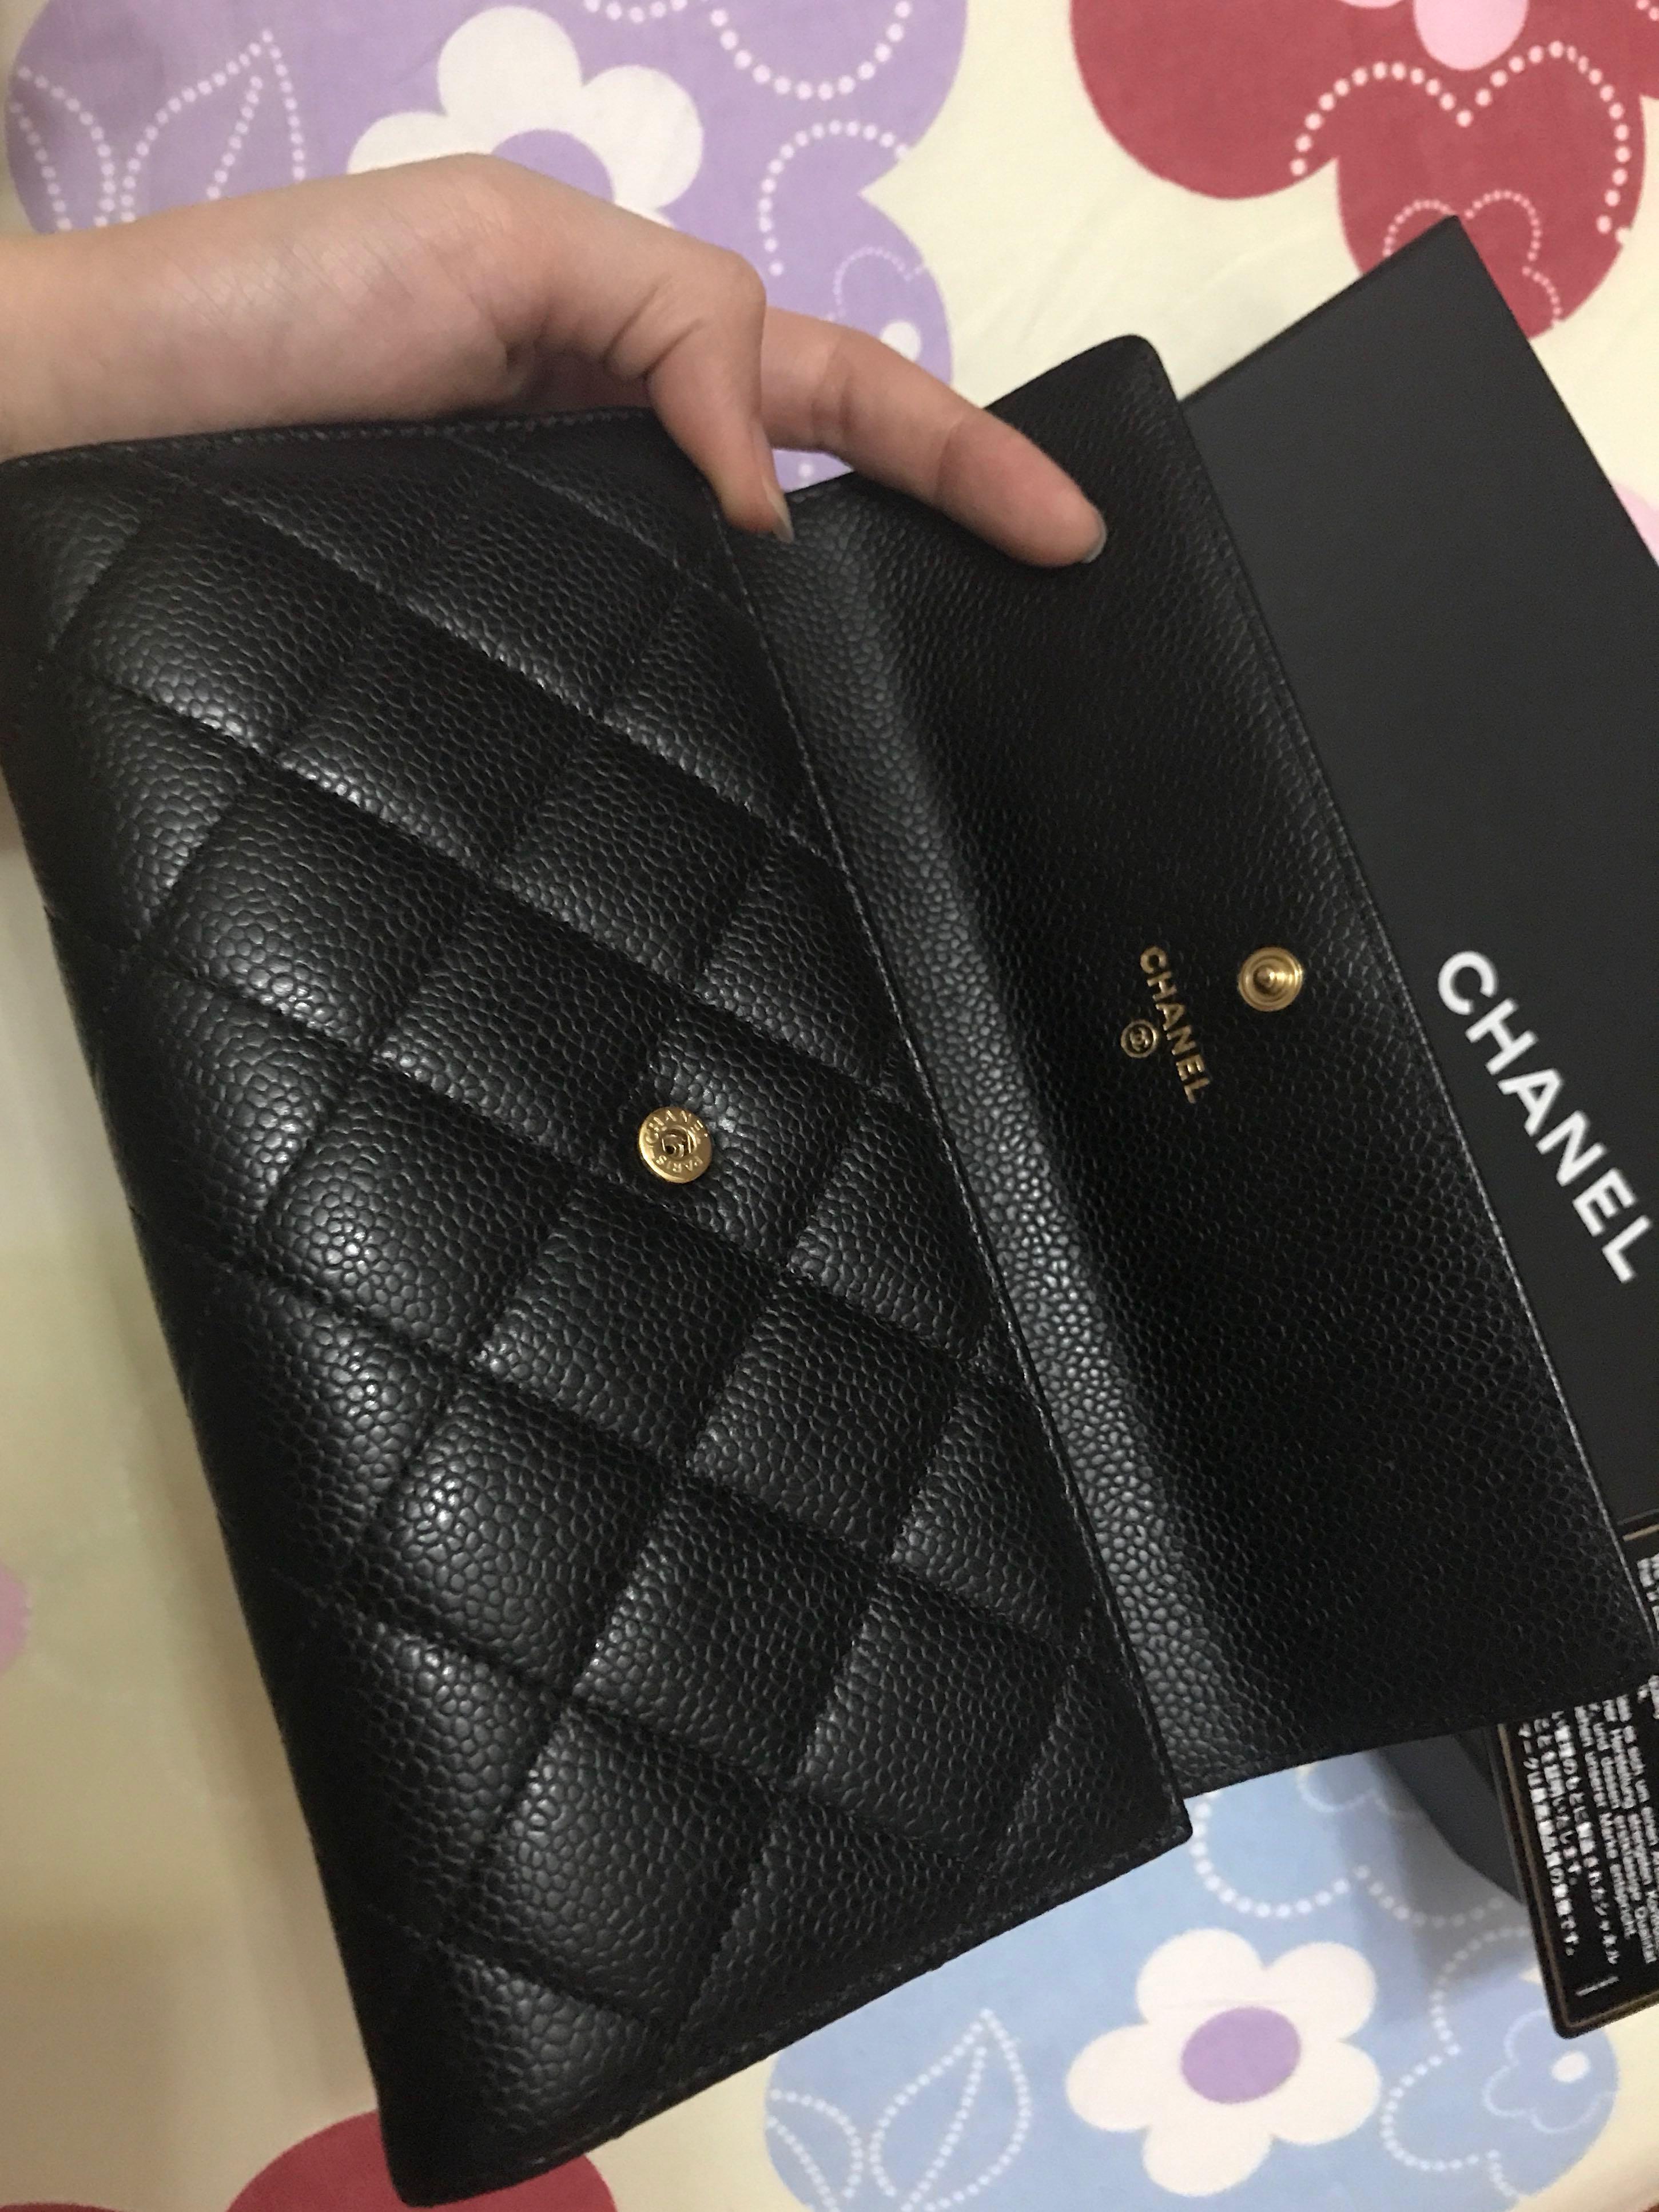 LNIB #21 Chanel Classic Long Wallet Black Caviar Ghw Portefeulle